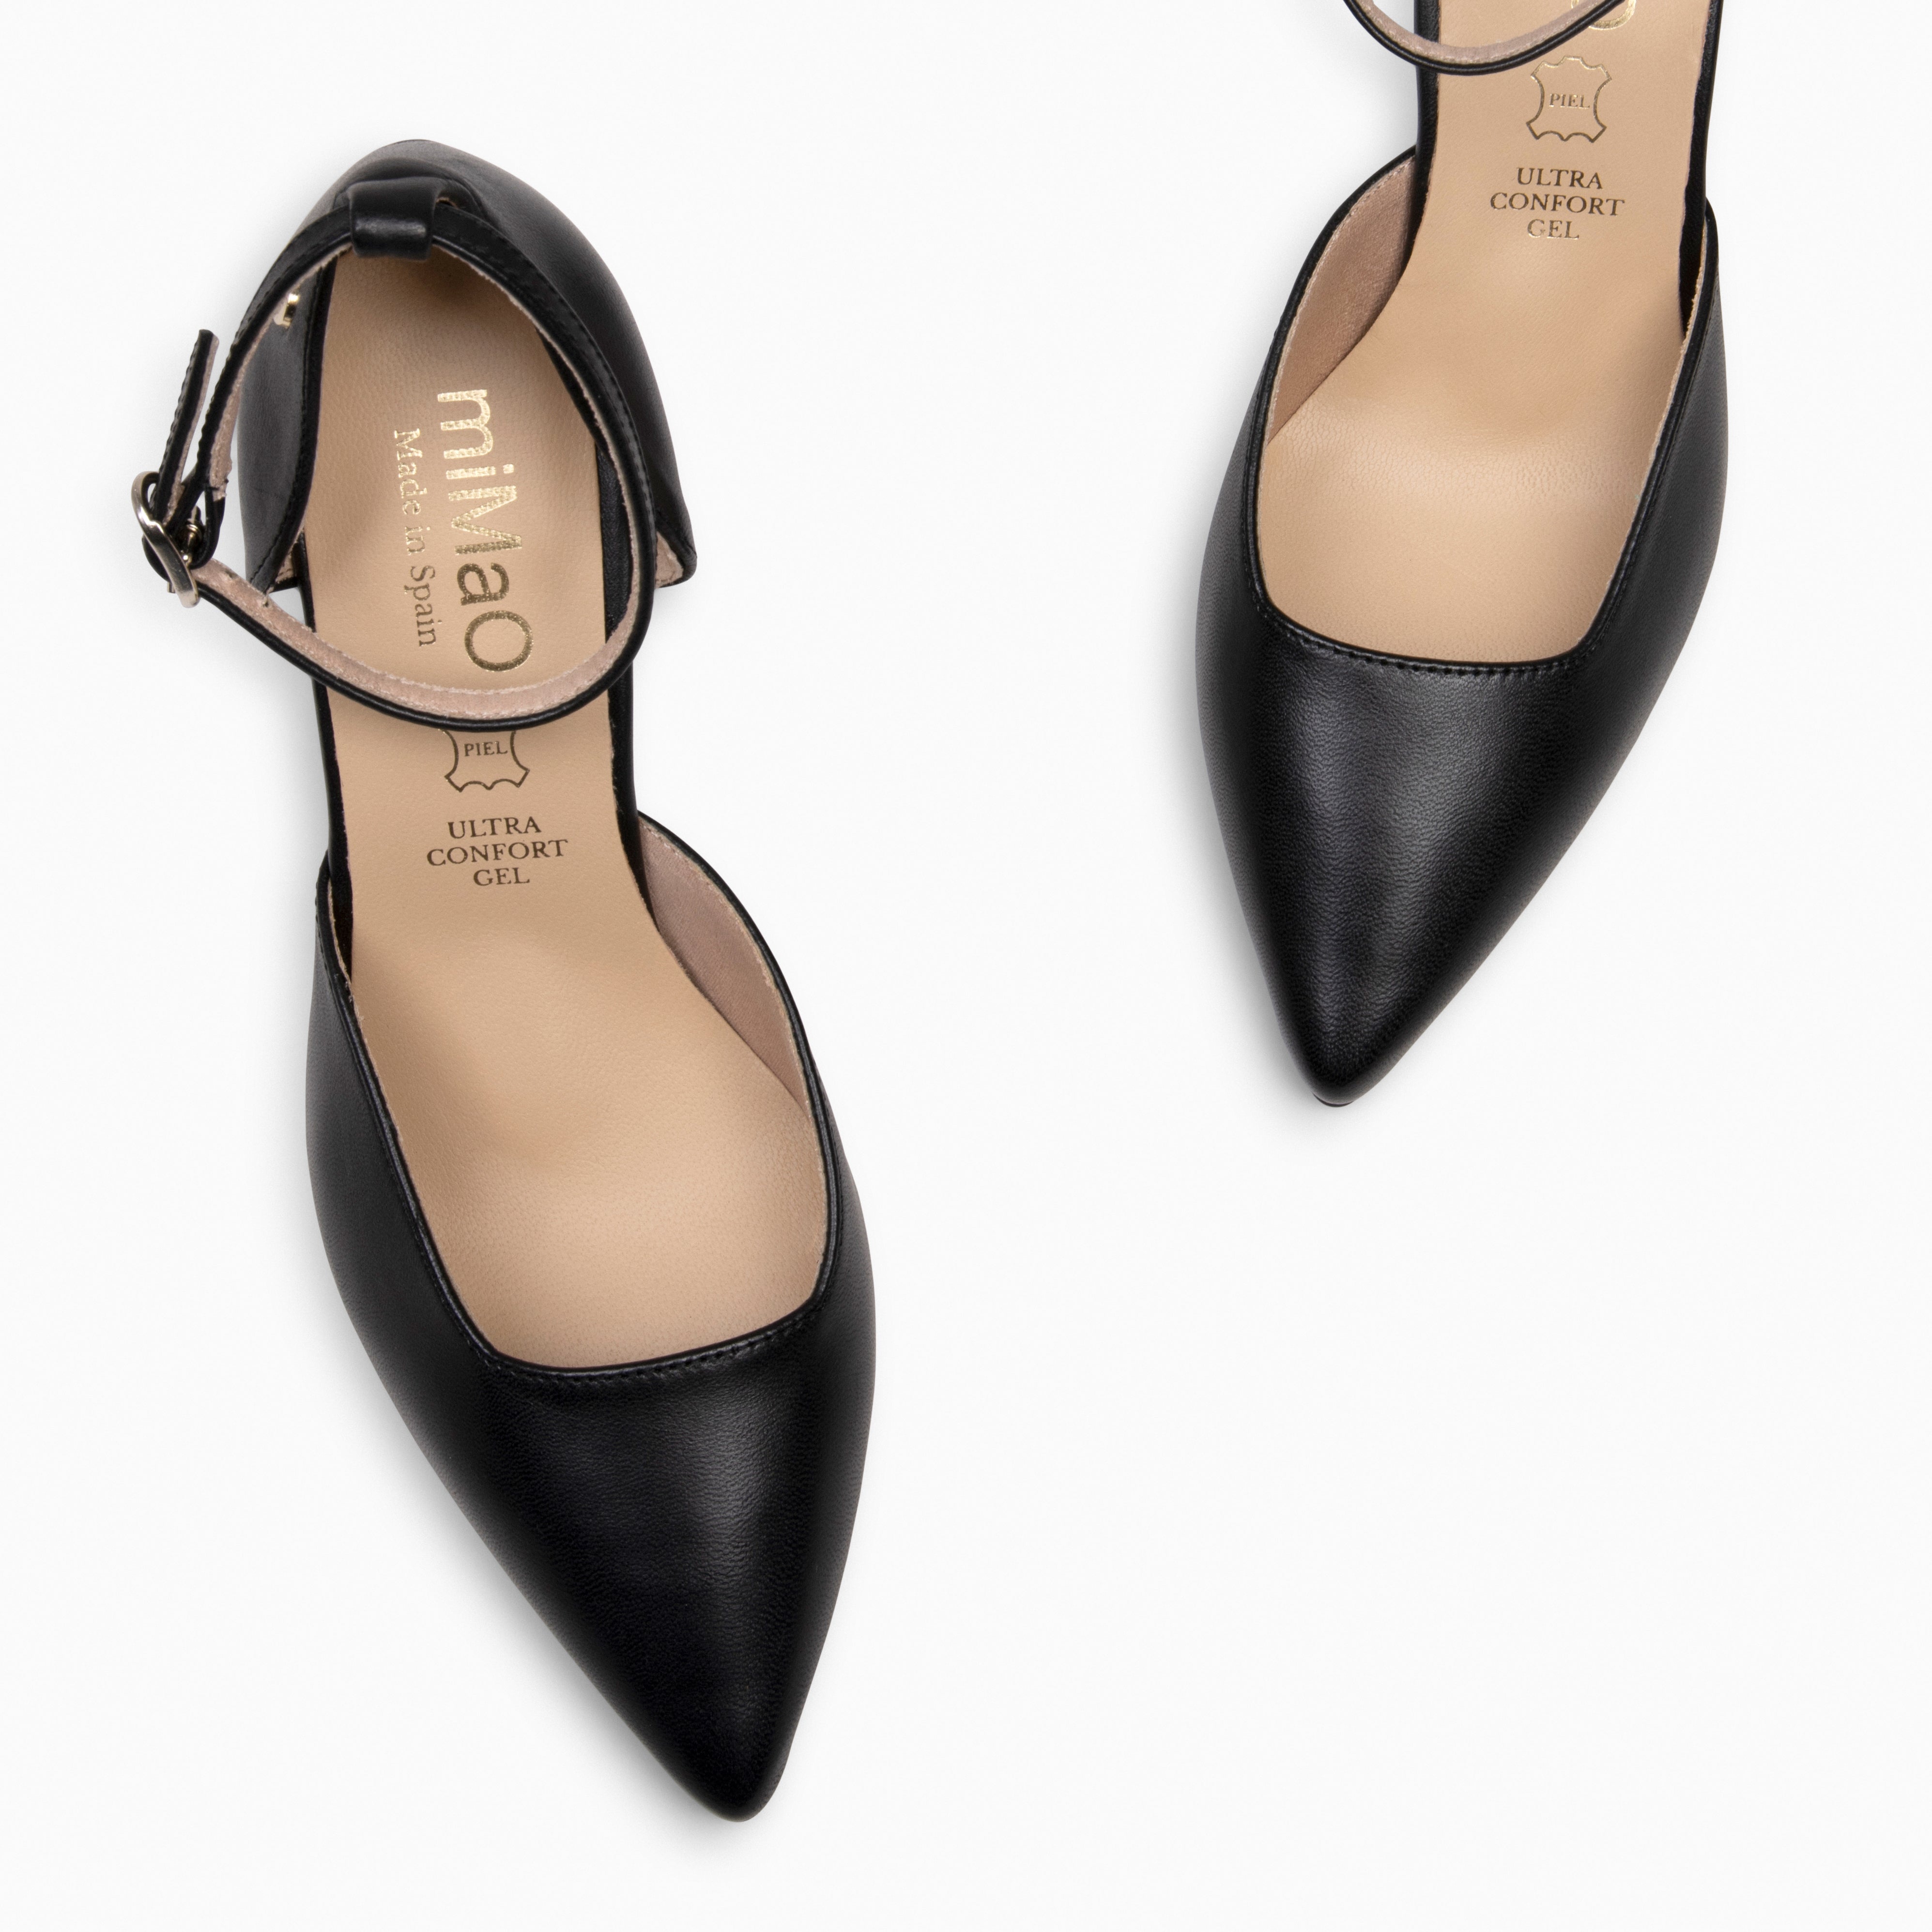 AINHOA – BLACK elegant heels